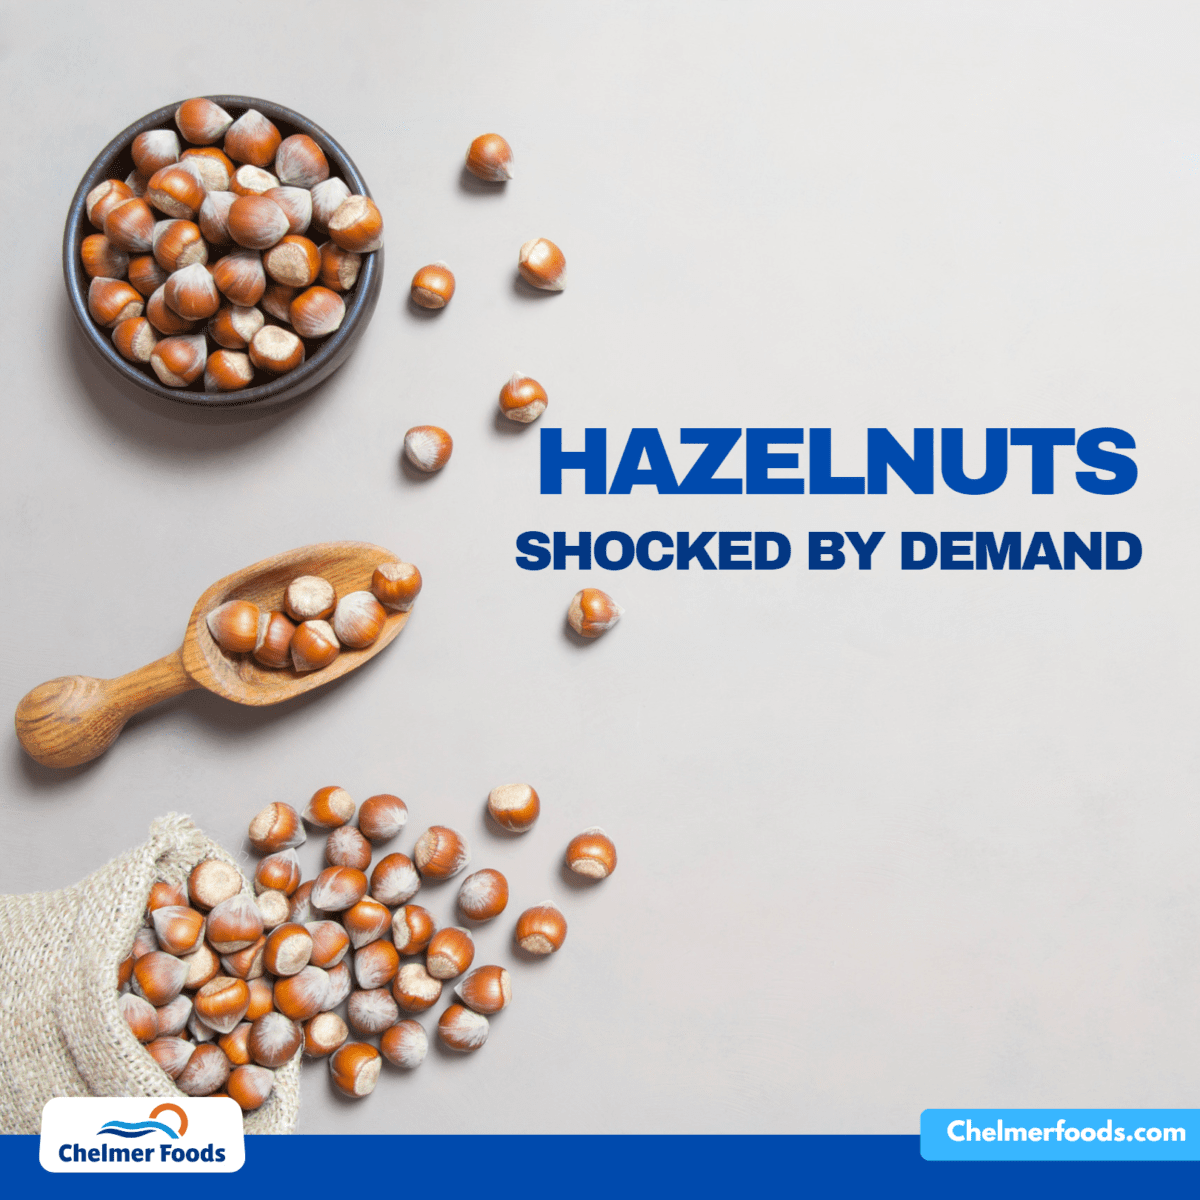 Hazelnuts: shocked by demand